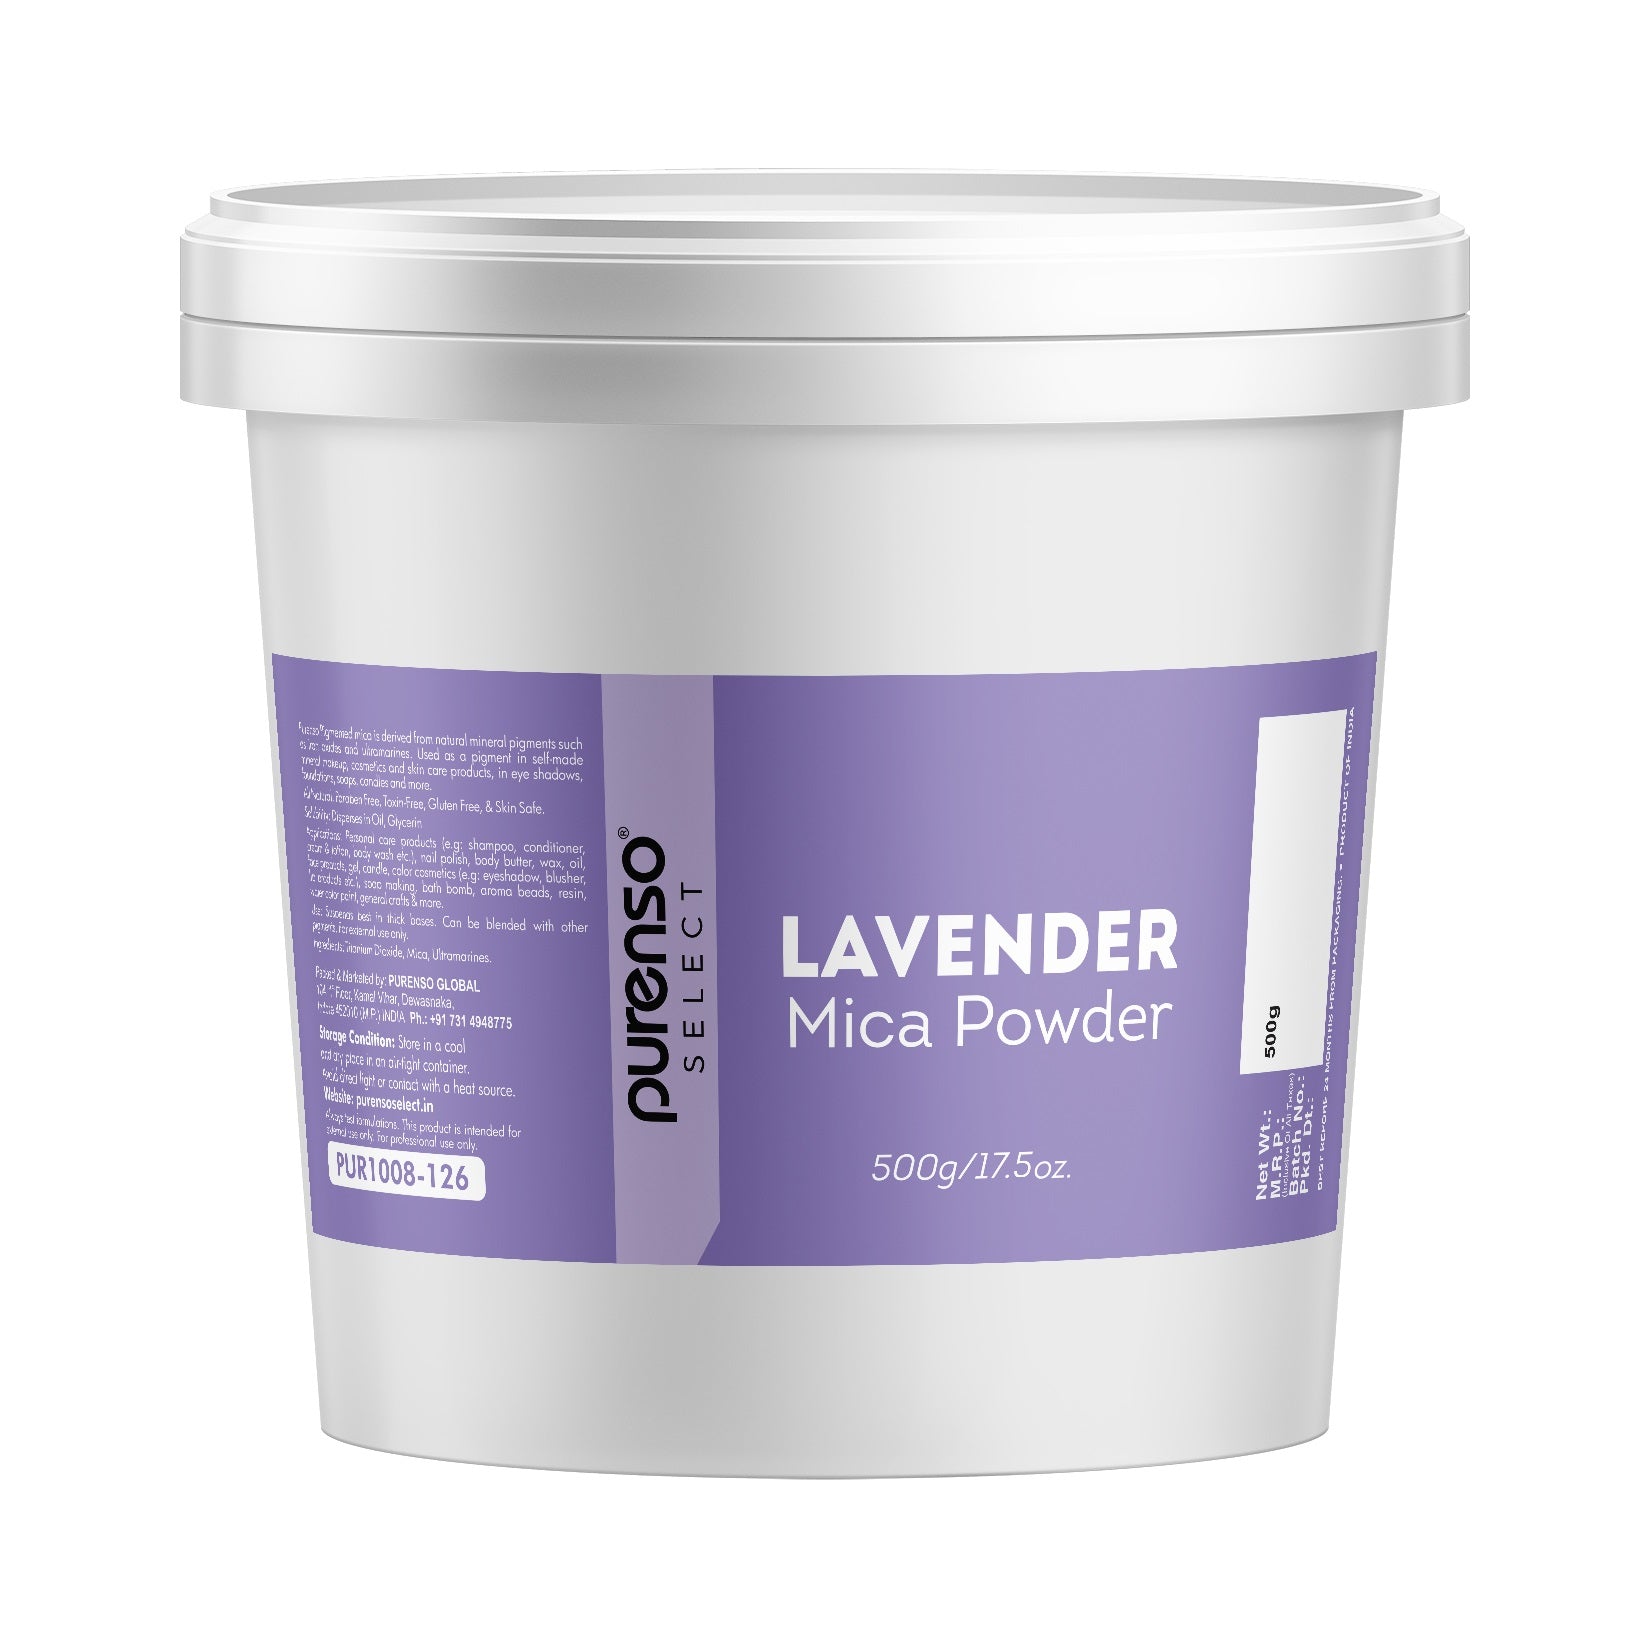 Lavender Mica Powder